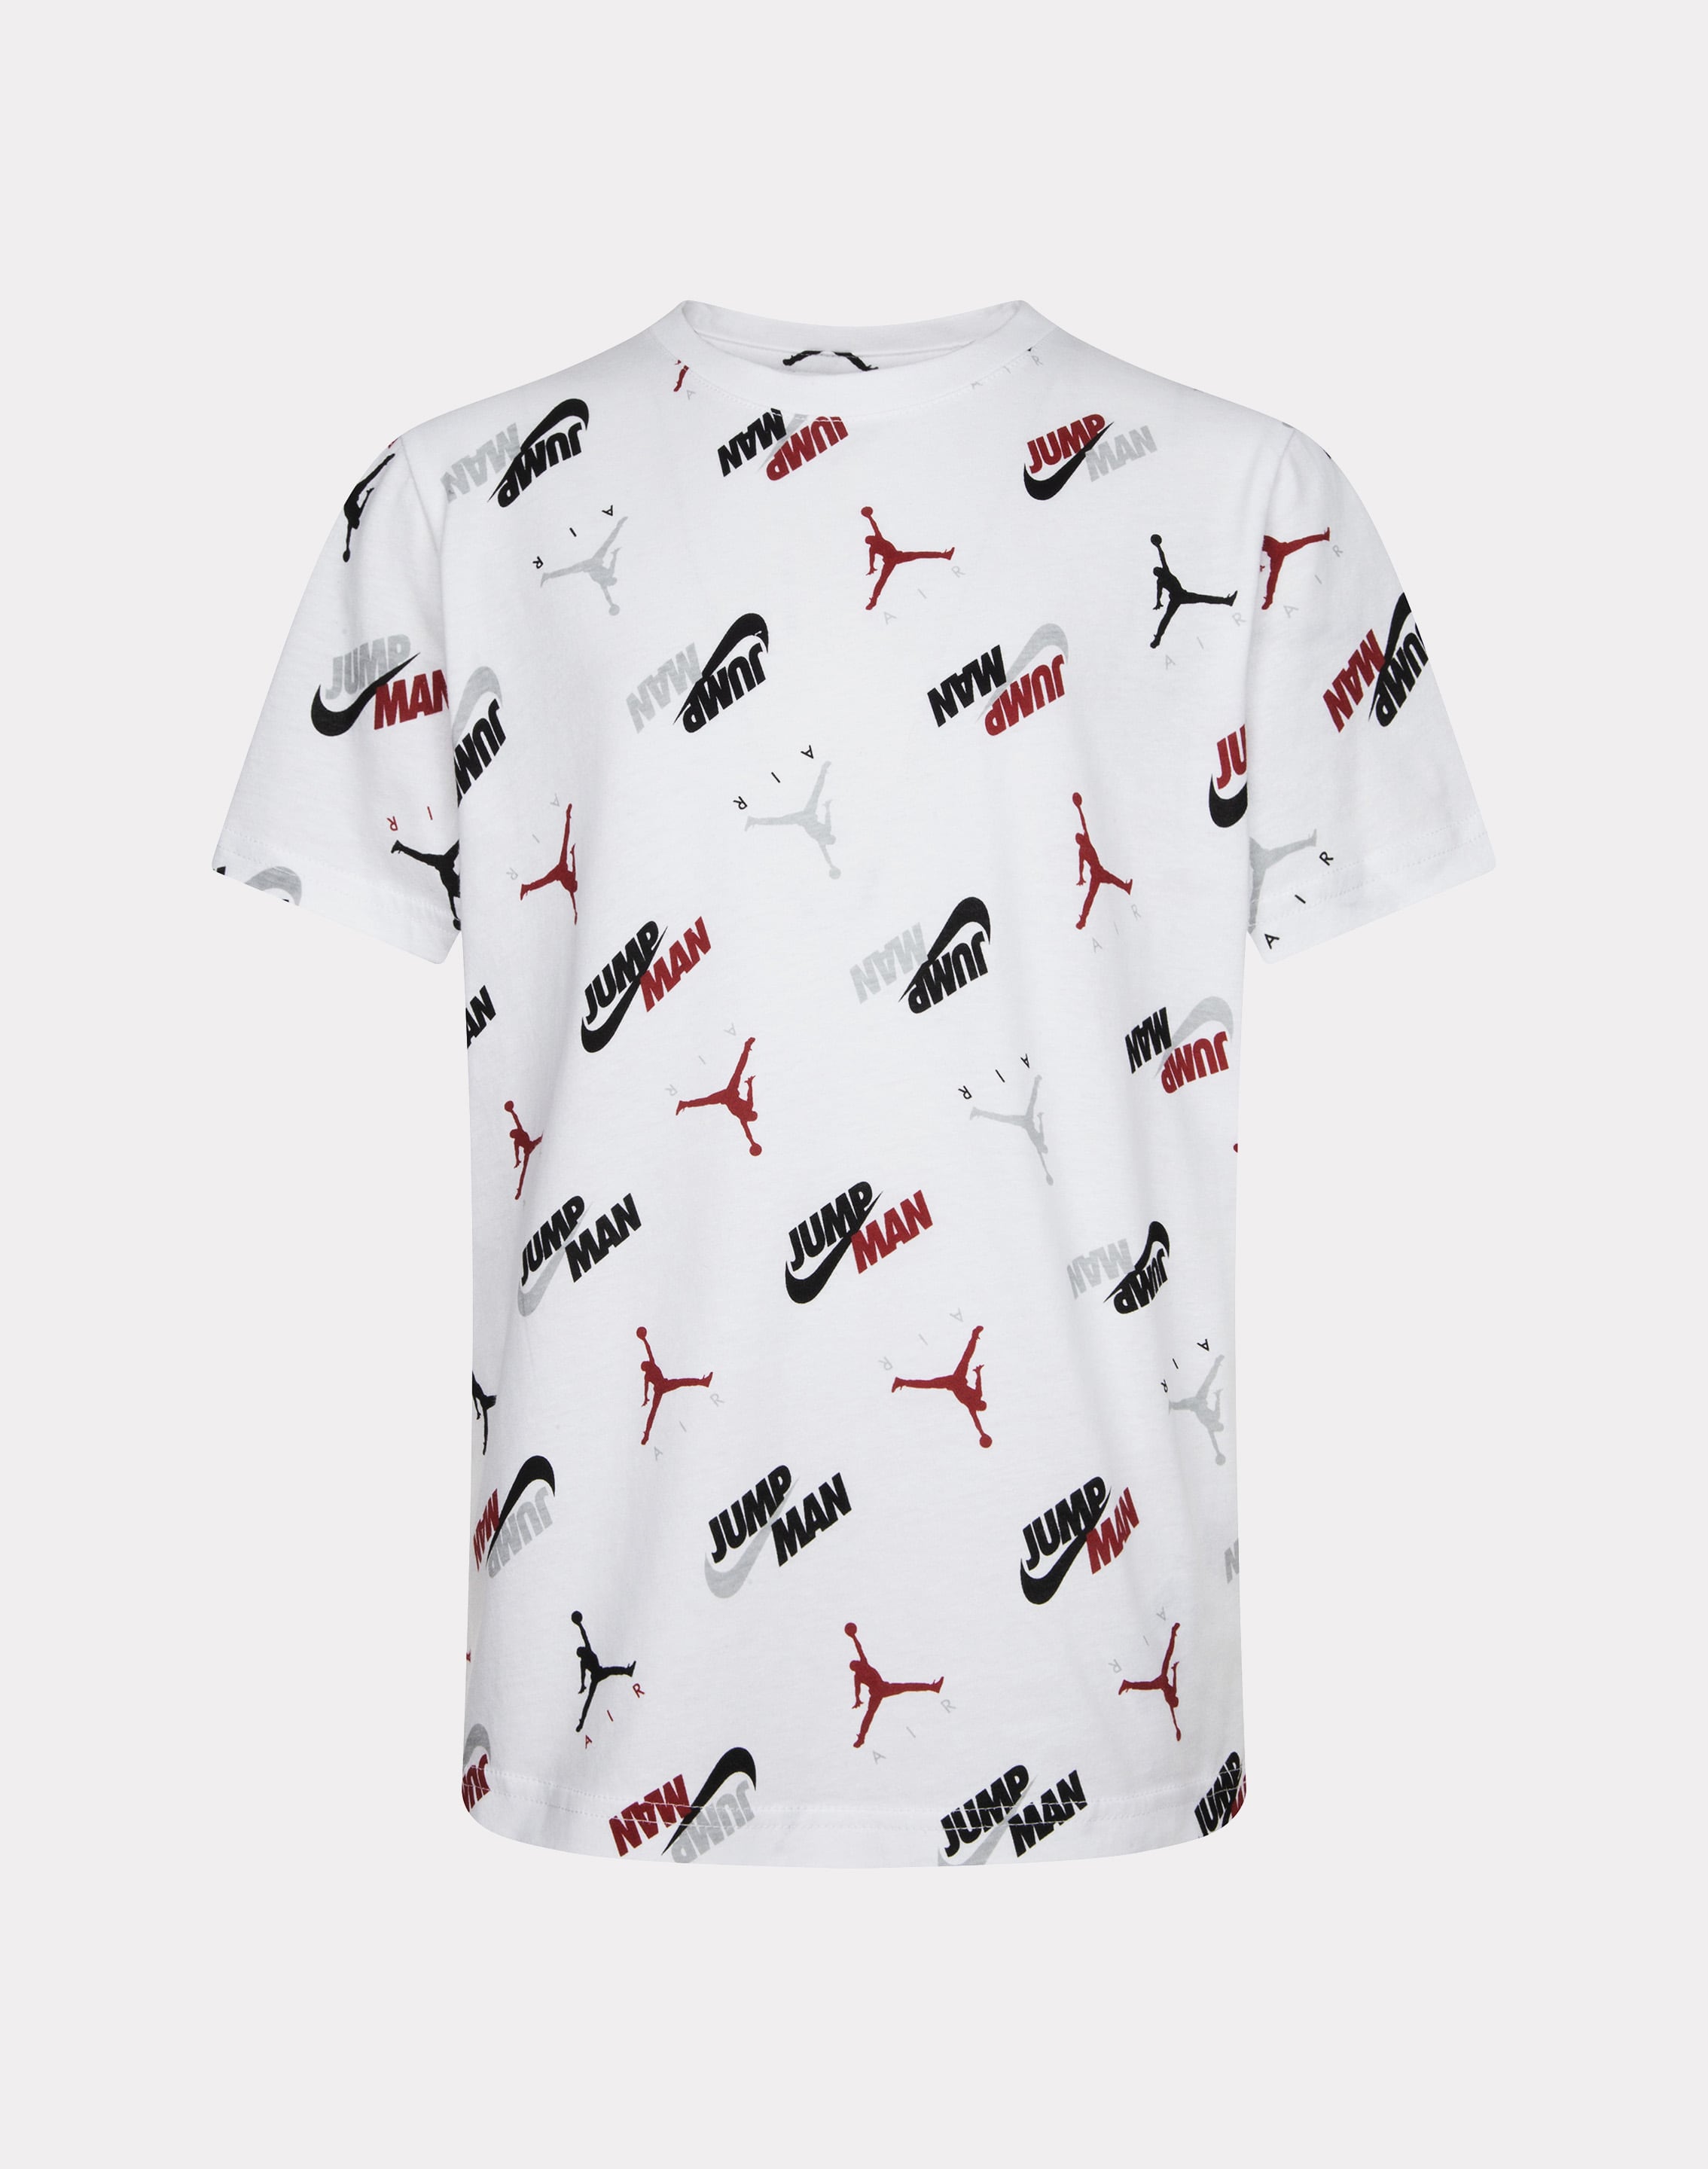 Venta de Camiseta Niño/a Jordan 95C612-001 Online